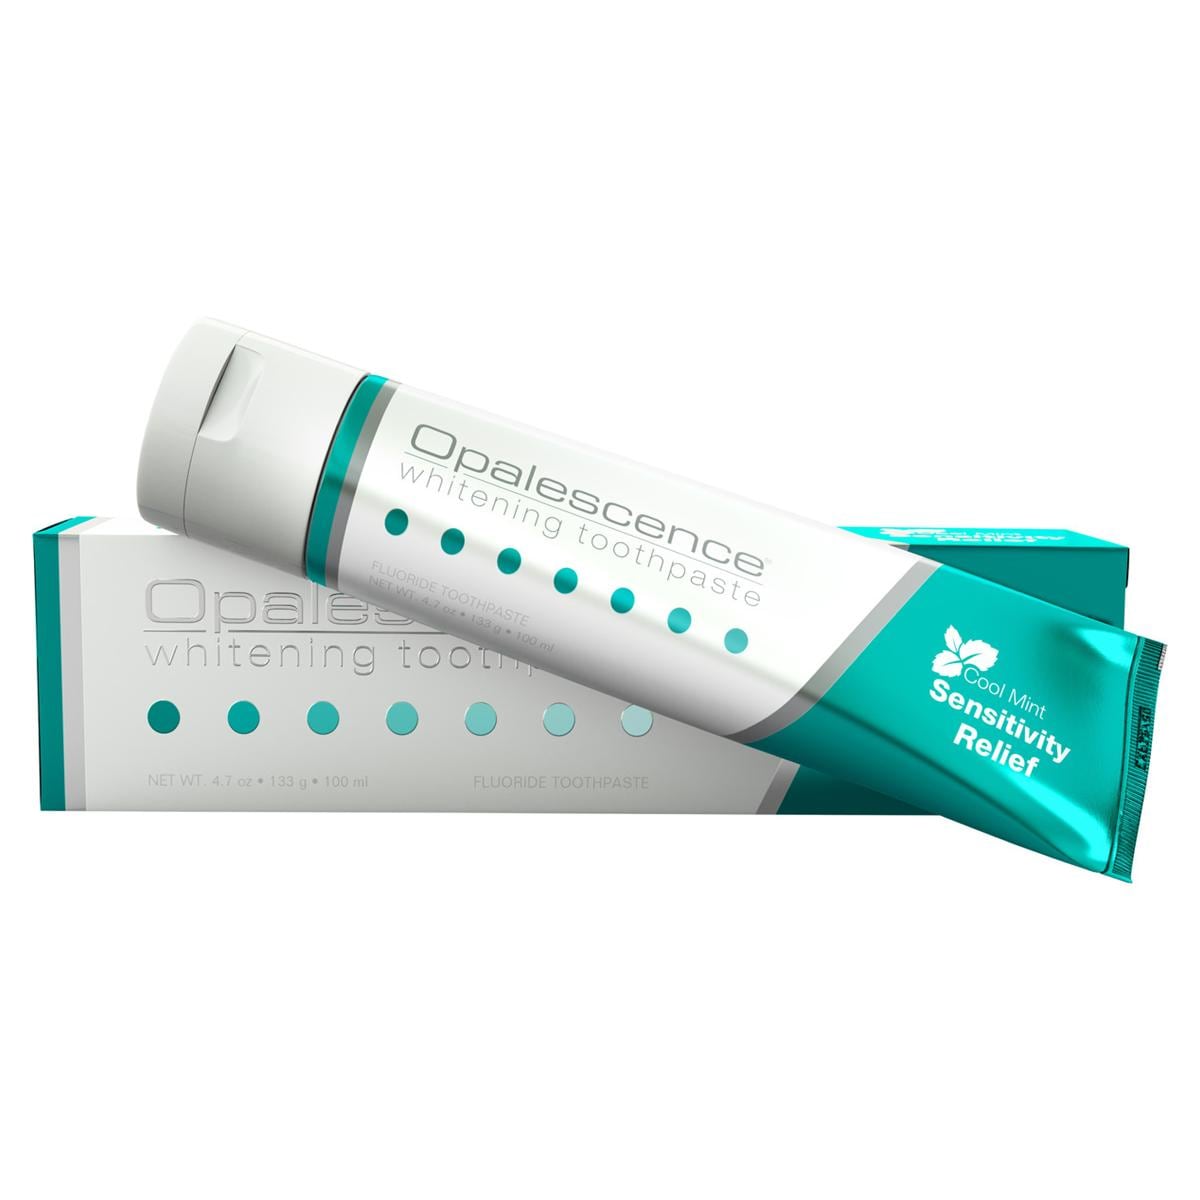 Opalescence Whitening tandpasta - sensitive - UP 3470, 12 x 139 ml